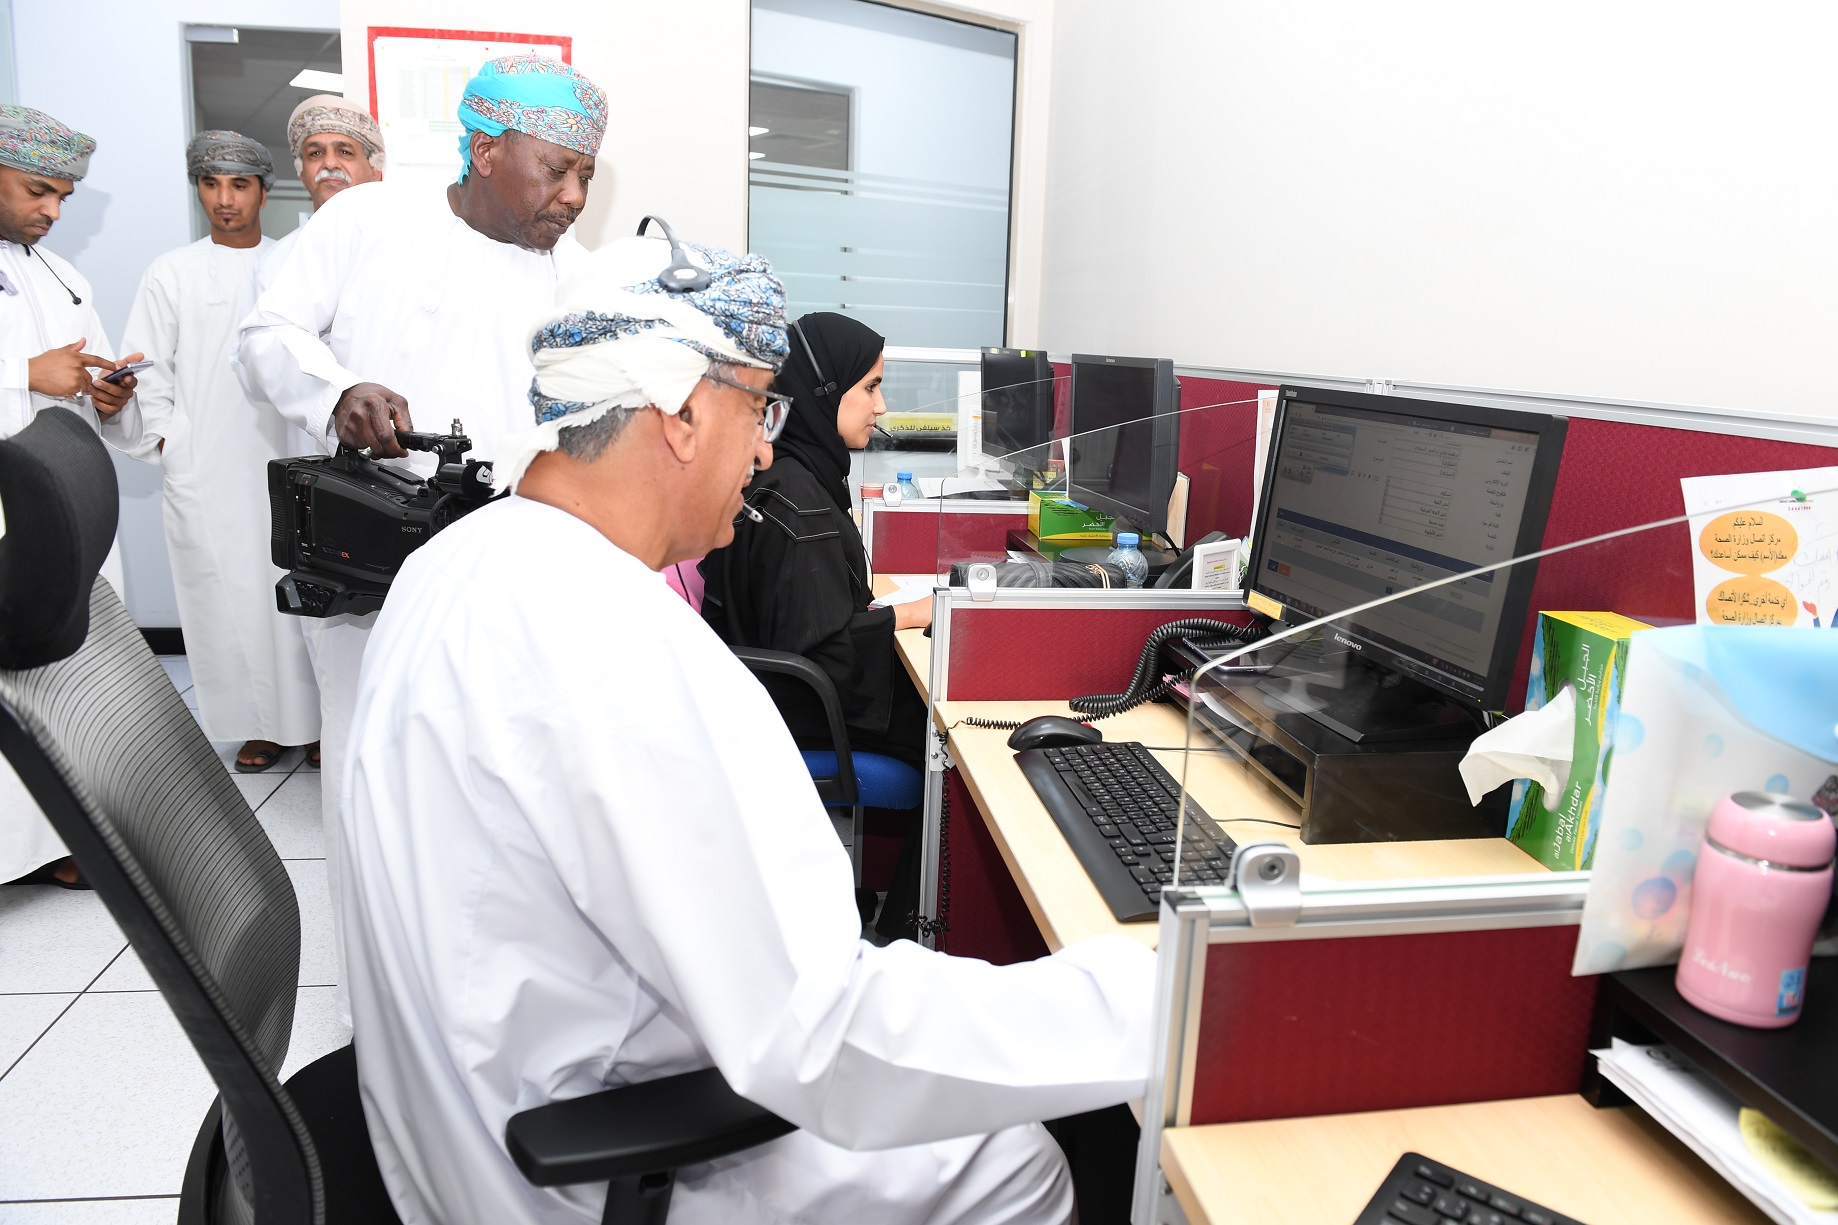 Coronavirus: Health Minister visits call center in Oman